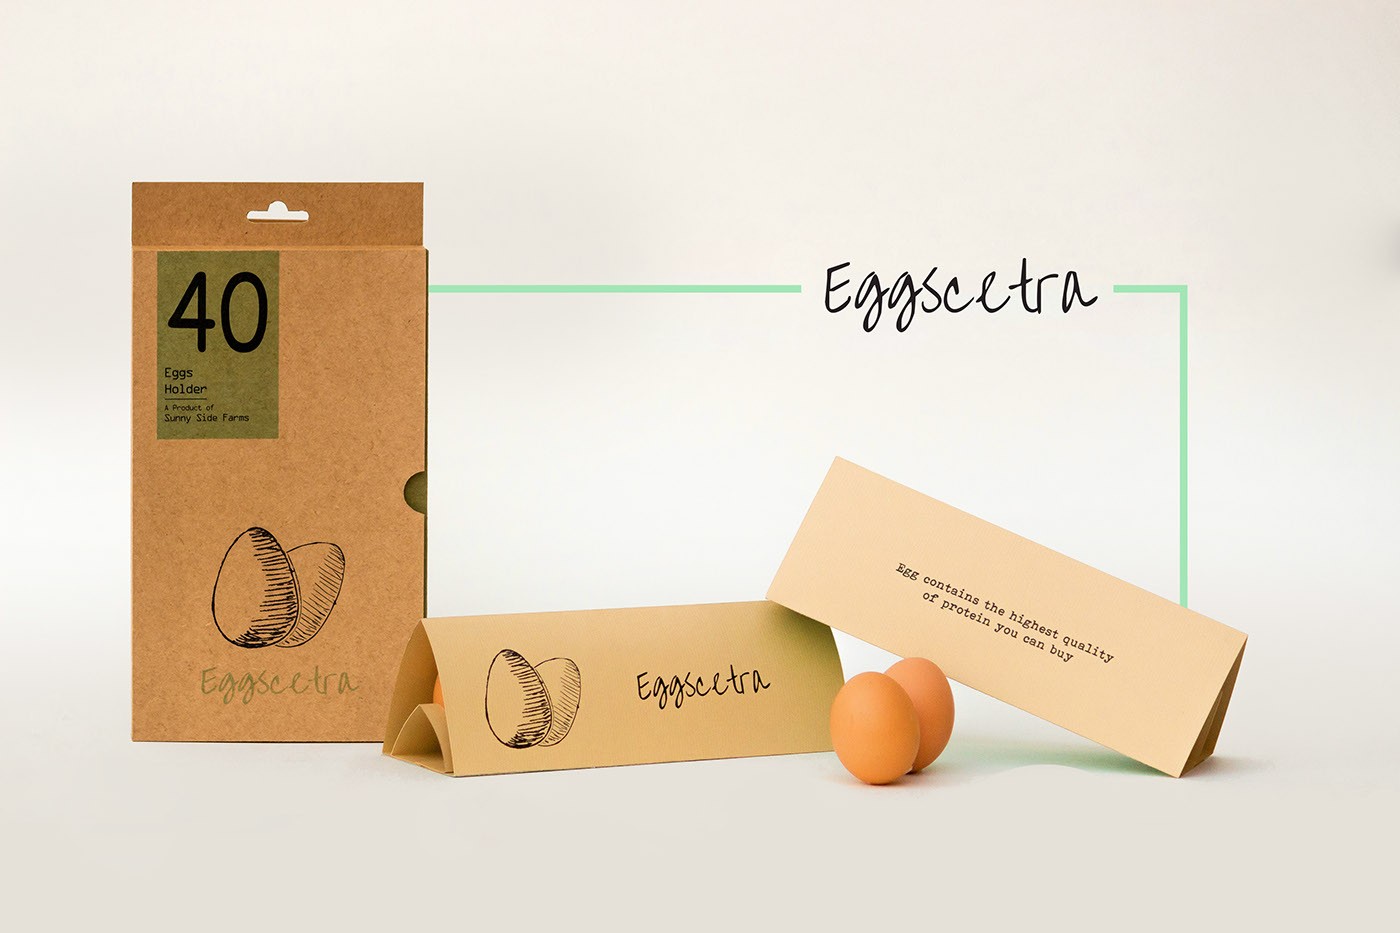 Eggscetra is an Concept Egg Packaging Design from Indian